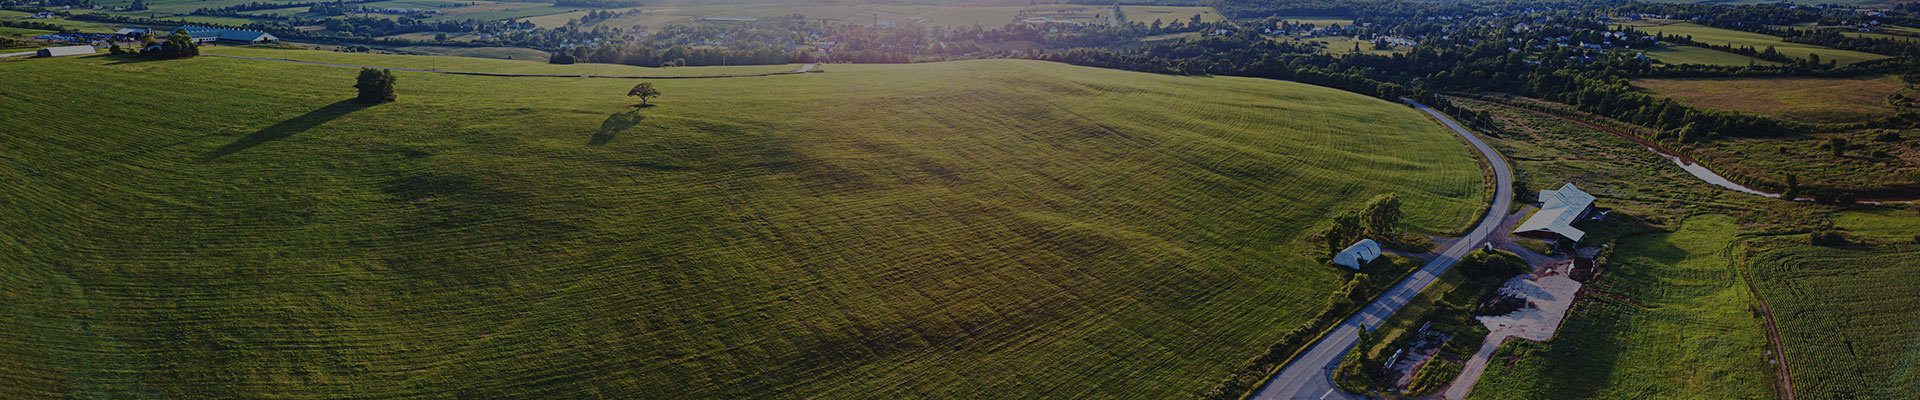 An aerial view of a rural landscape of grass & corn fields